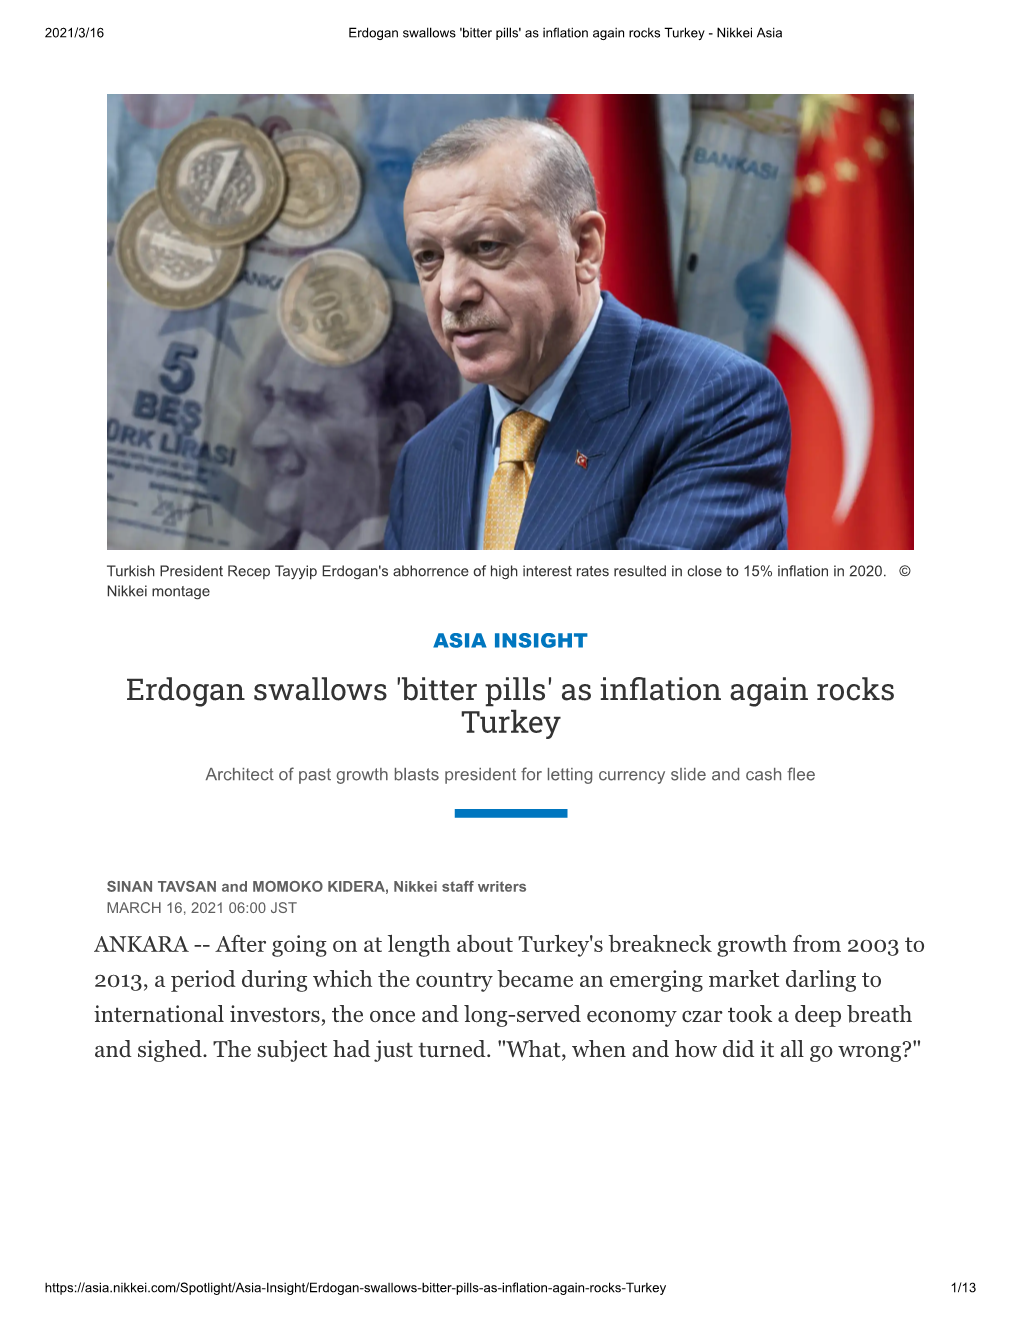 Erdogan Swallows 'Bitter Pills' As in Ation Again Rocks